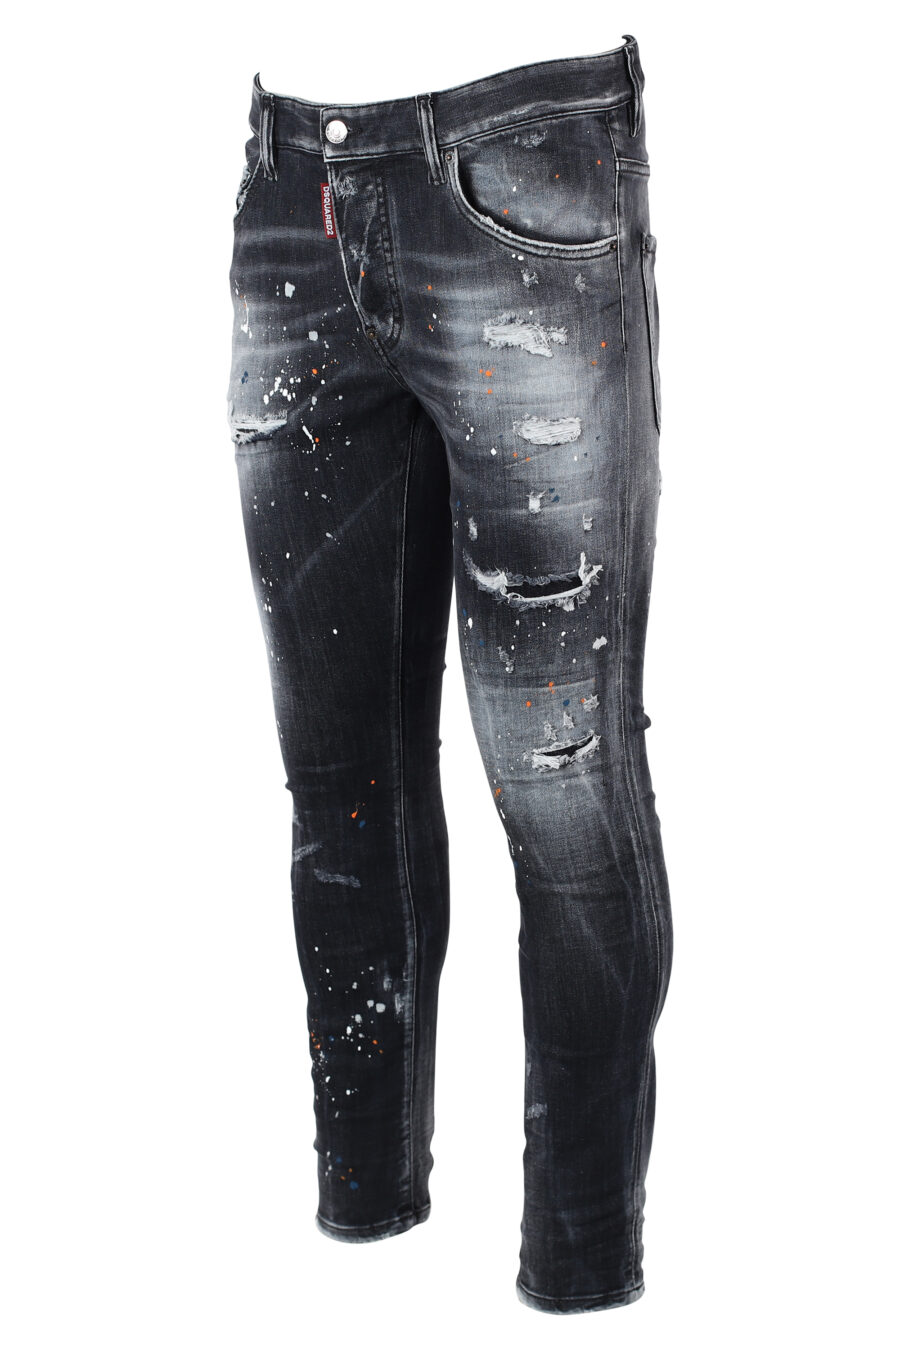 Schwarze "super twinky jean" getragene und zerrissene Jeans - IMG 9890